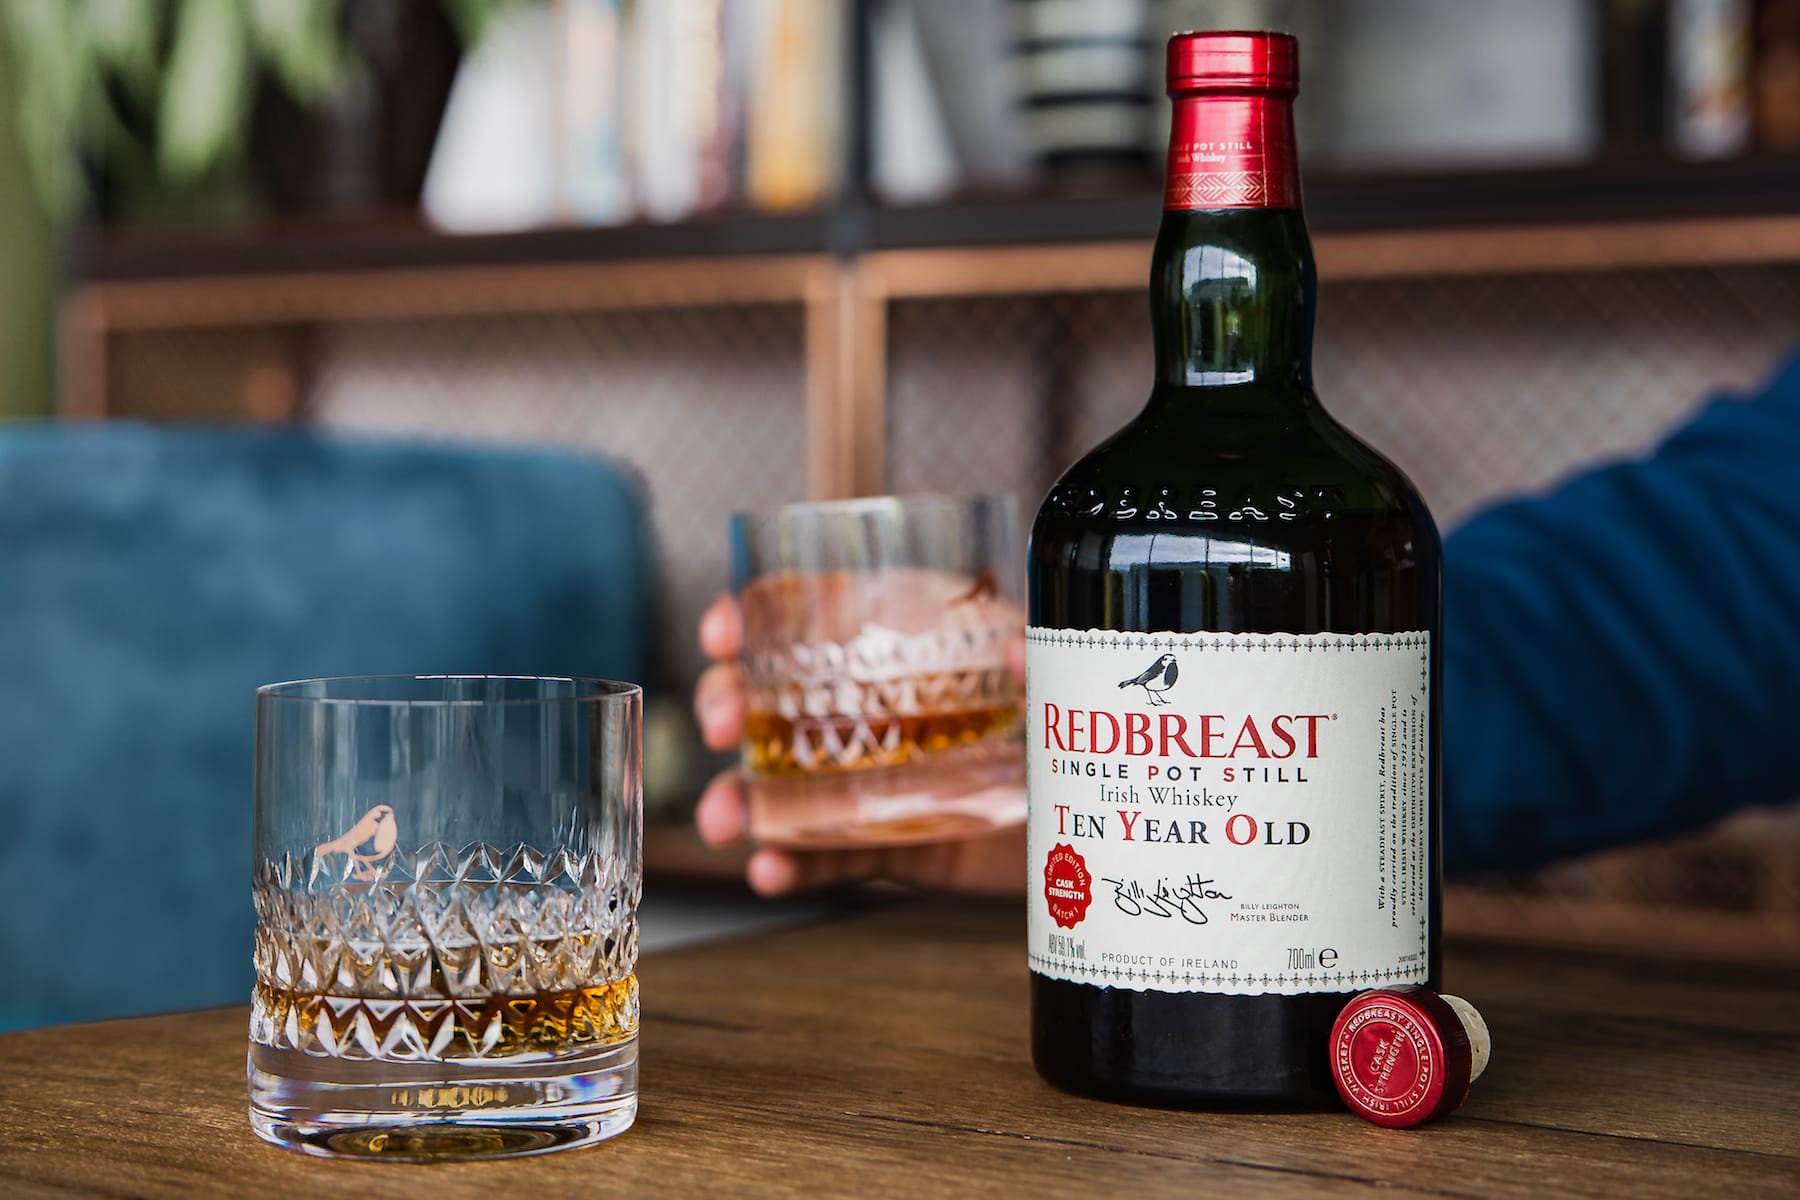 Redbreast Irish Whiskey 10 year old limited edition